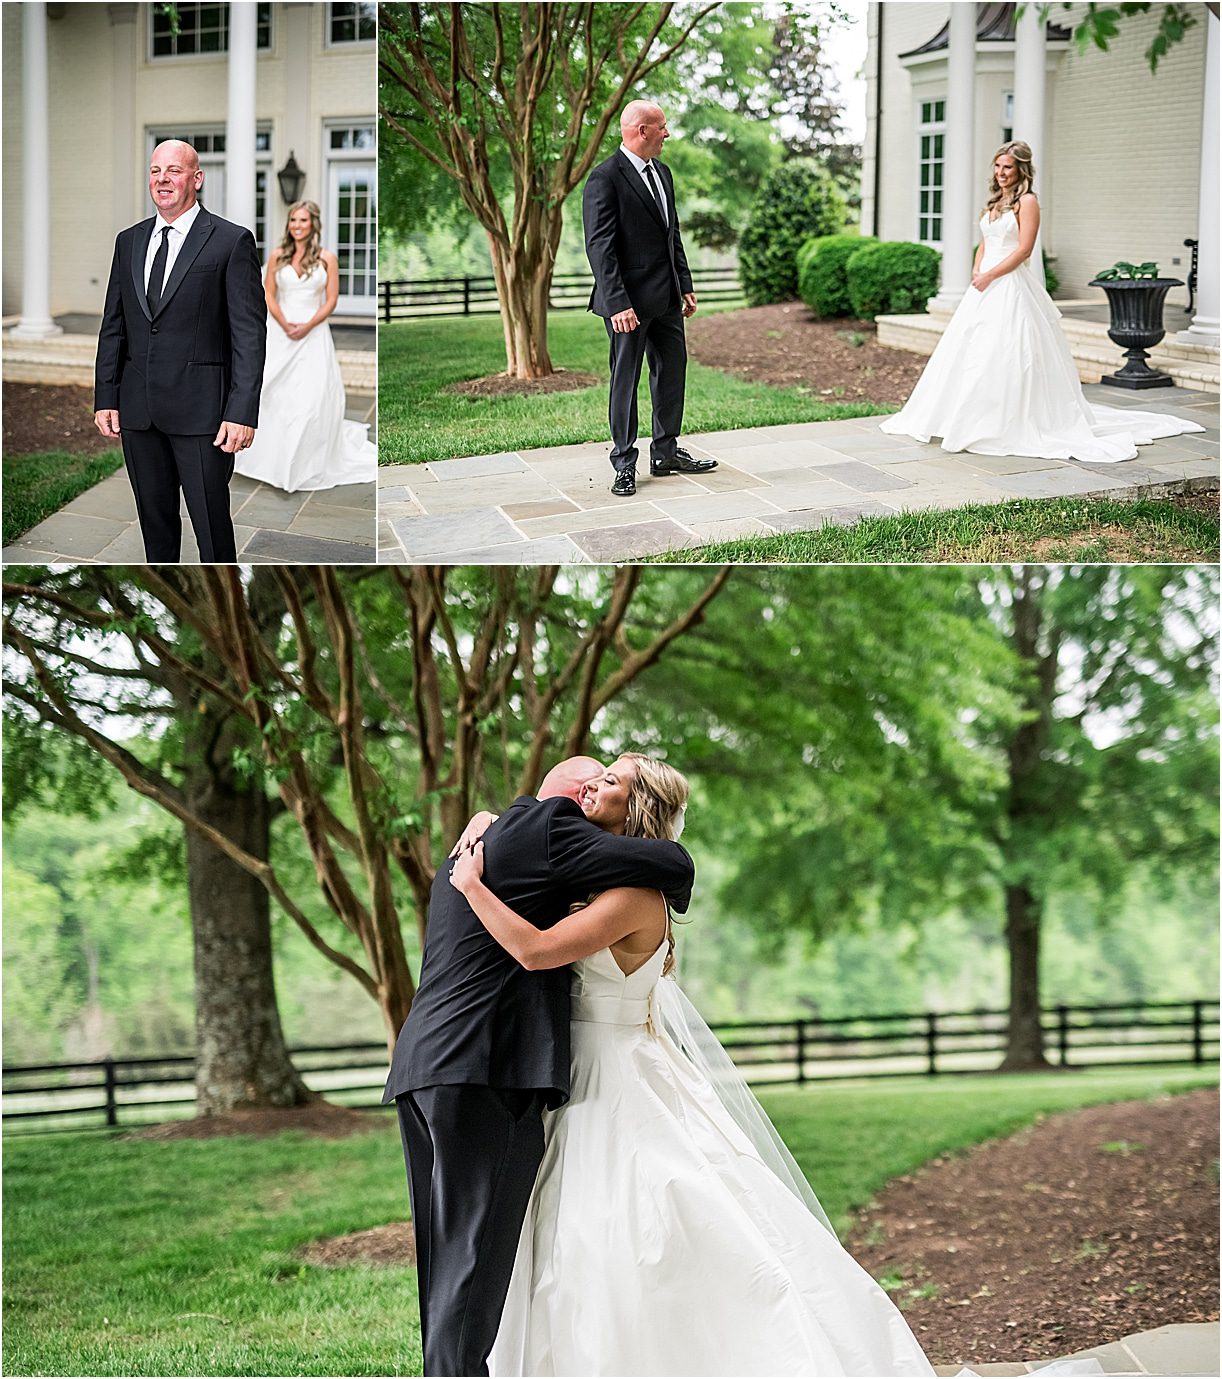 Father First Look | Drive In Wedding Ideas | COVID Wedding Ceremony Ideas | Hill City Bride Virginia Weddings